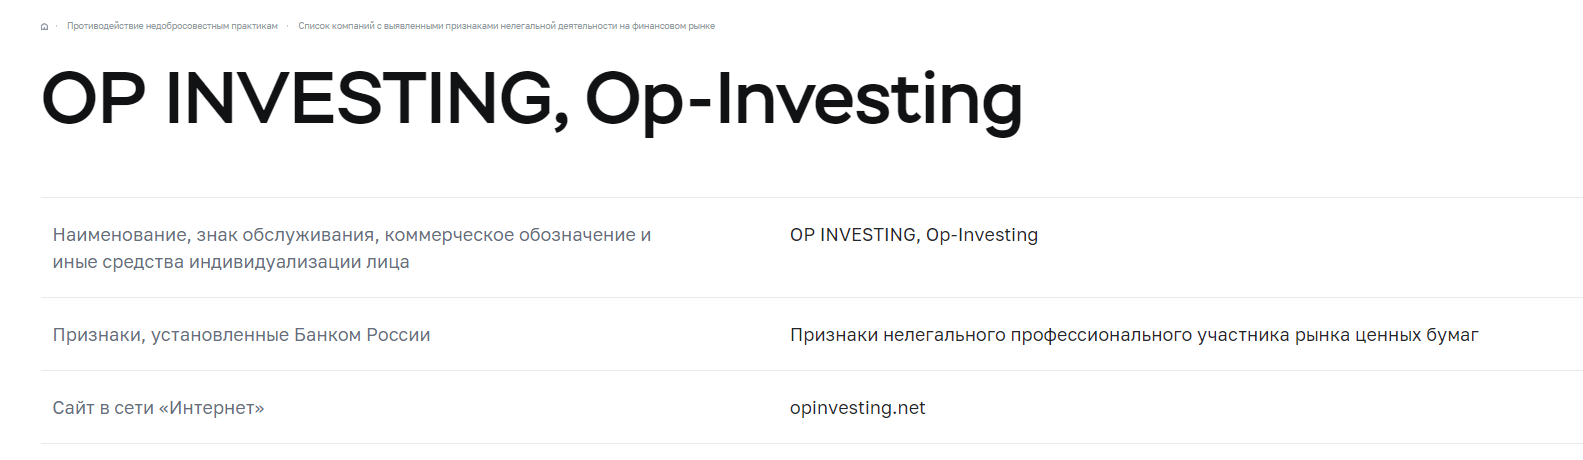 OP Investing - вся правда о фирме, Фото № 8 - 1-consult.net